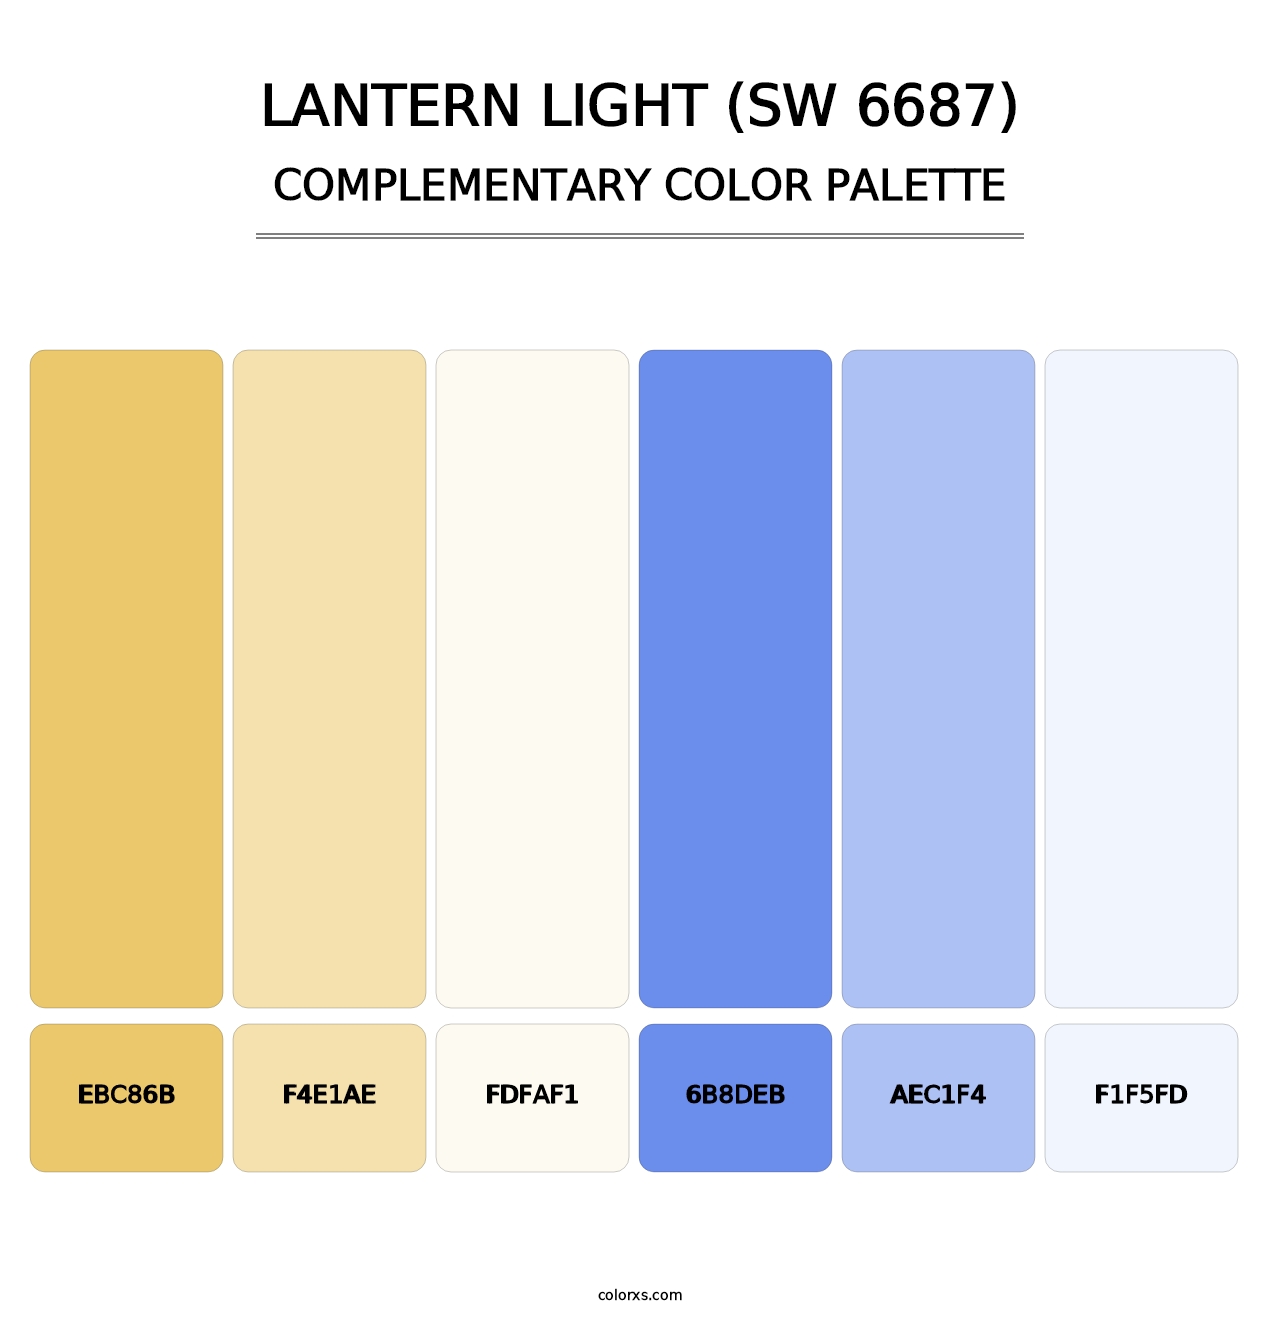 Lantern Light (SW 6687) - Complementary Color Palette